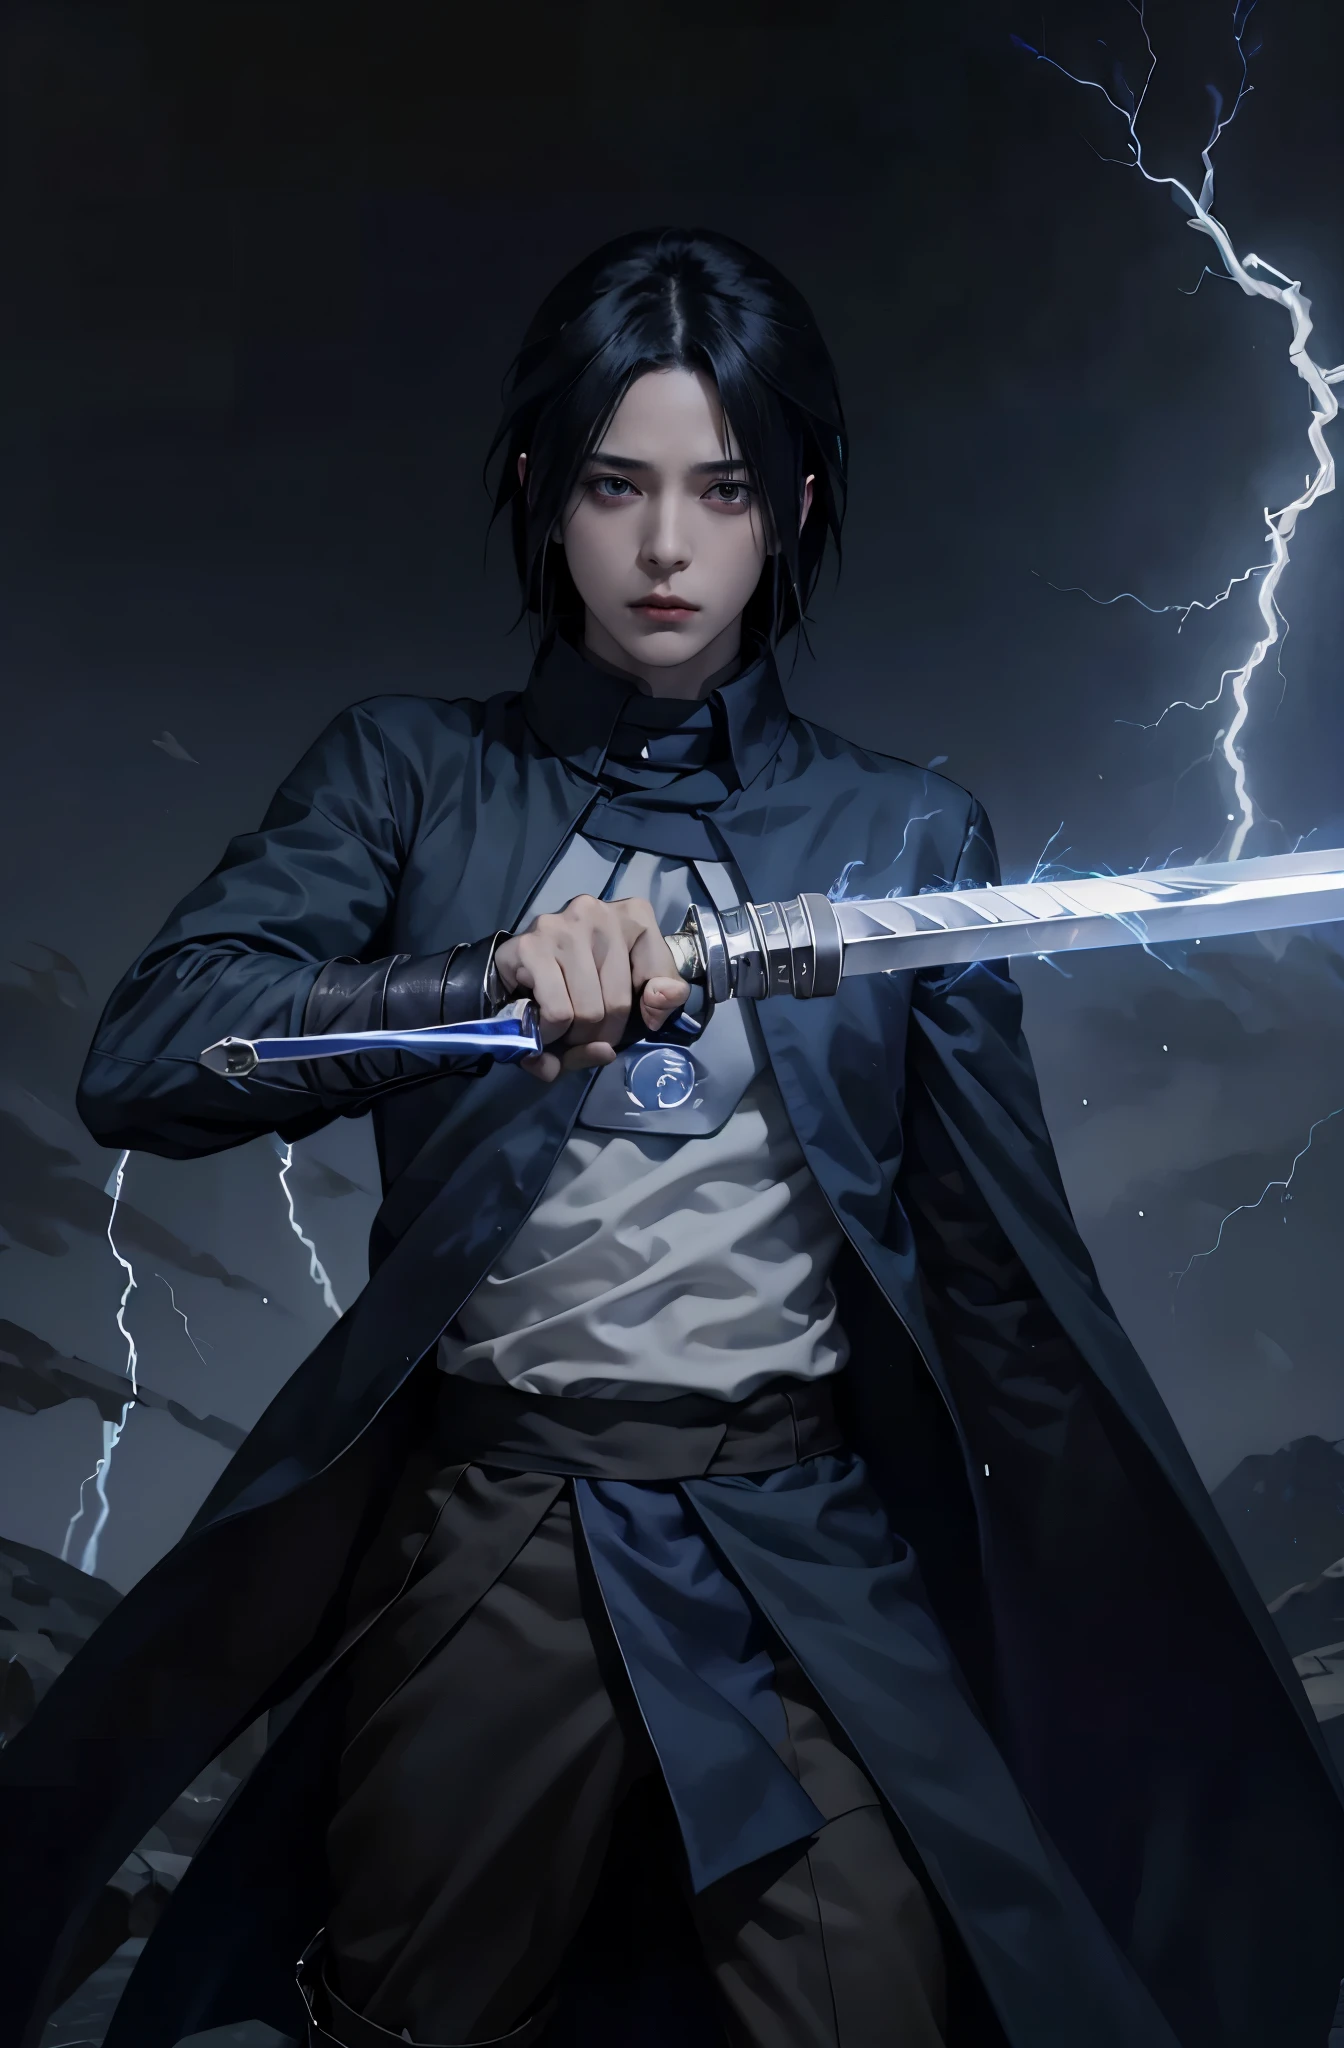 1male, Sasuke Uchiha holding a sword to the viewer, full body, blue lightning VFX in the sword, blue lightning , glowing blue lightning sword, black coat